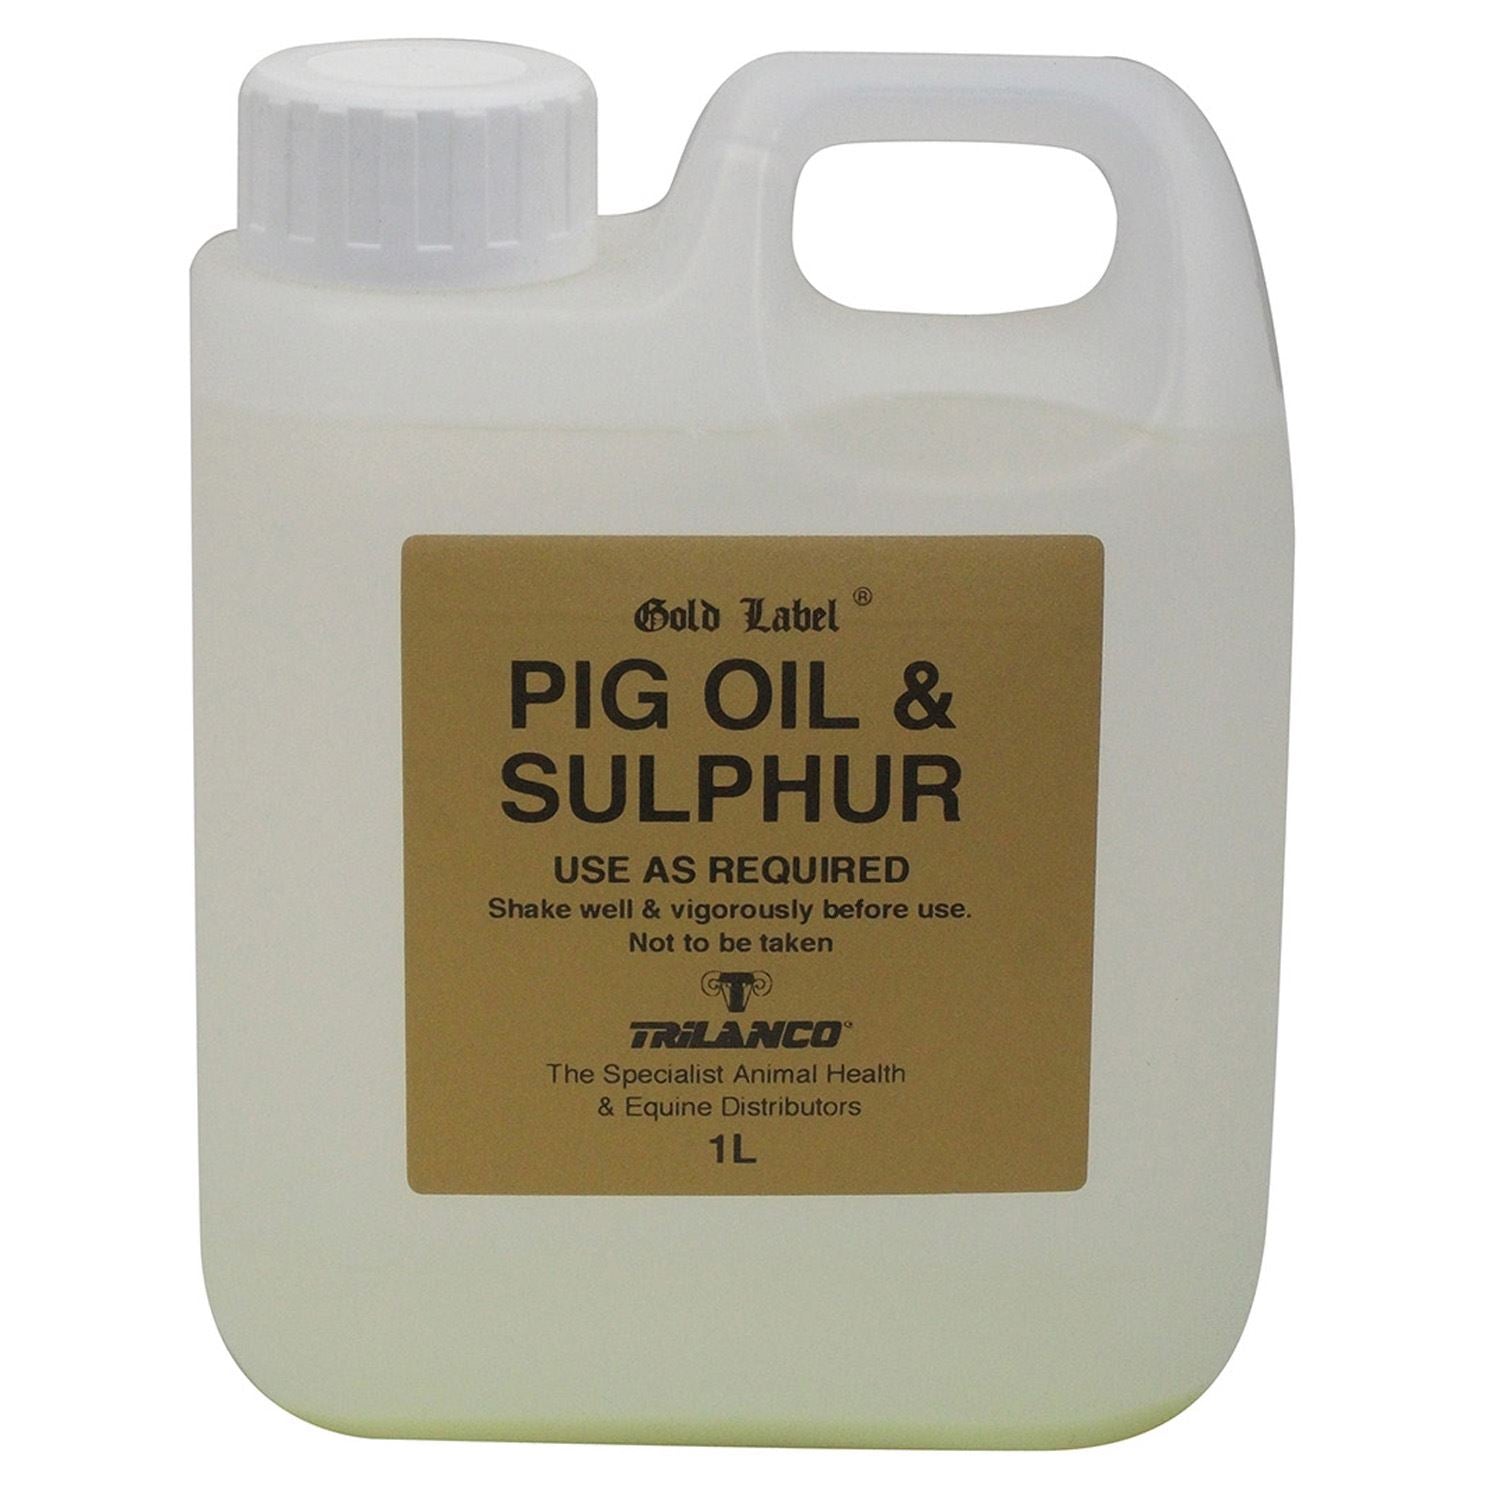 Gold Label Pig Oil & Sulphur - Just Horse Riders